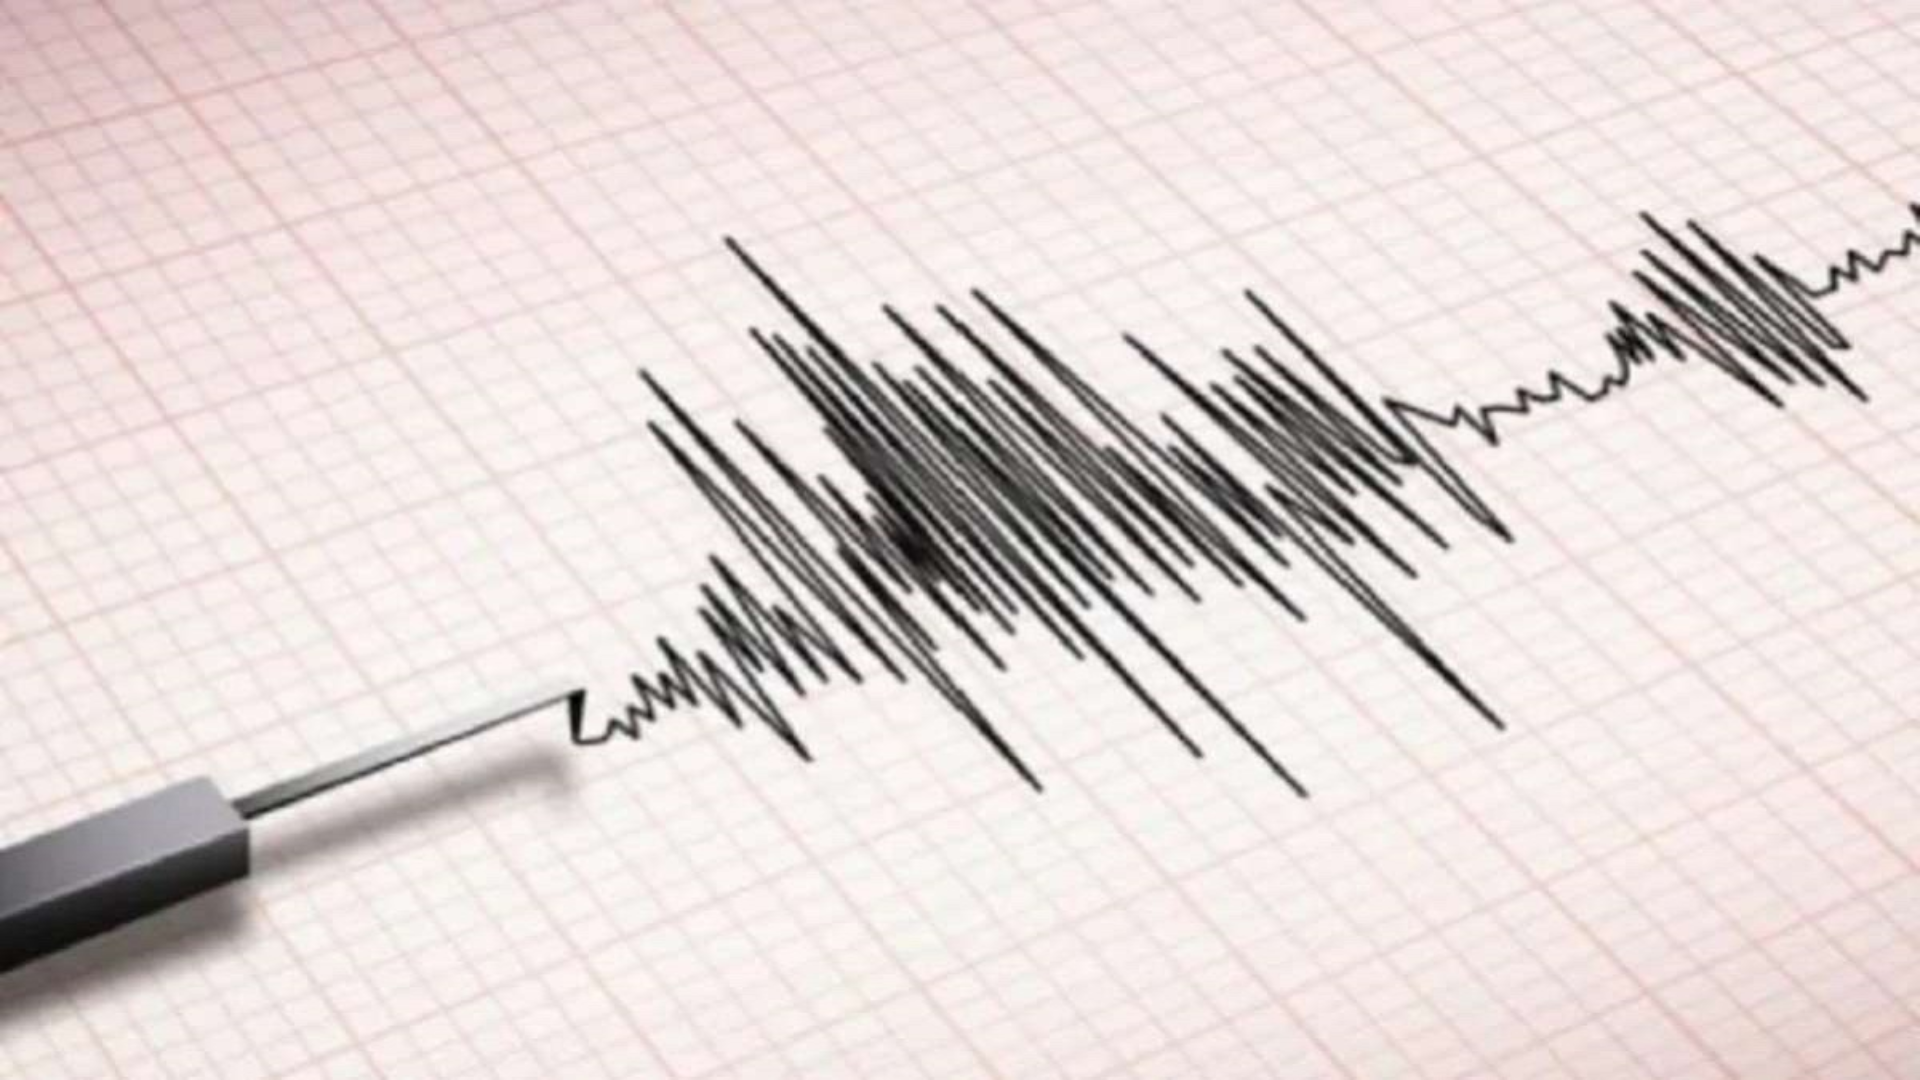 Earthquake Magnitude 4.5 Strikes Afghanistan, NCS Reports